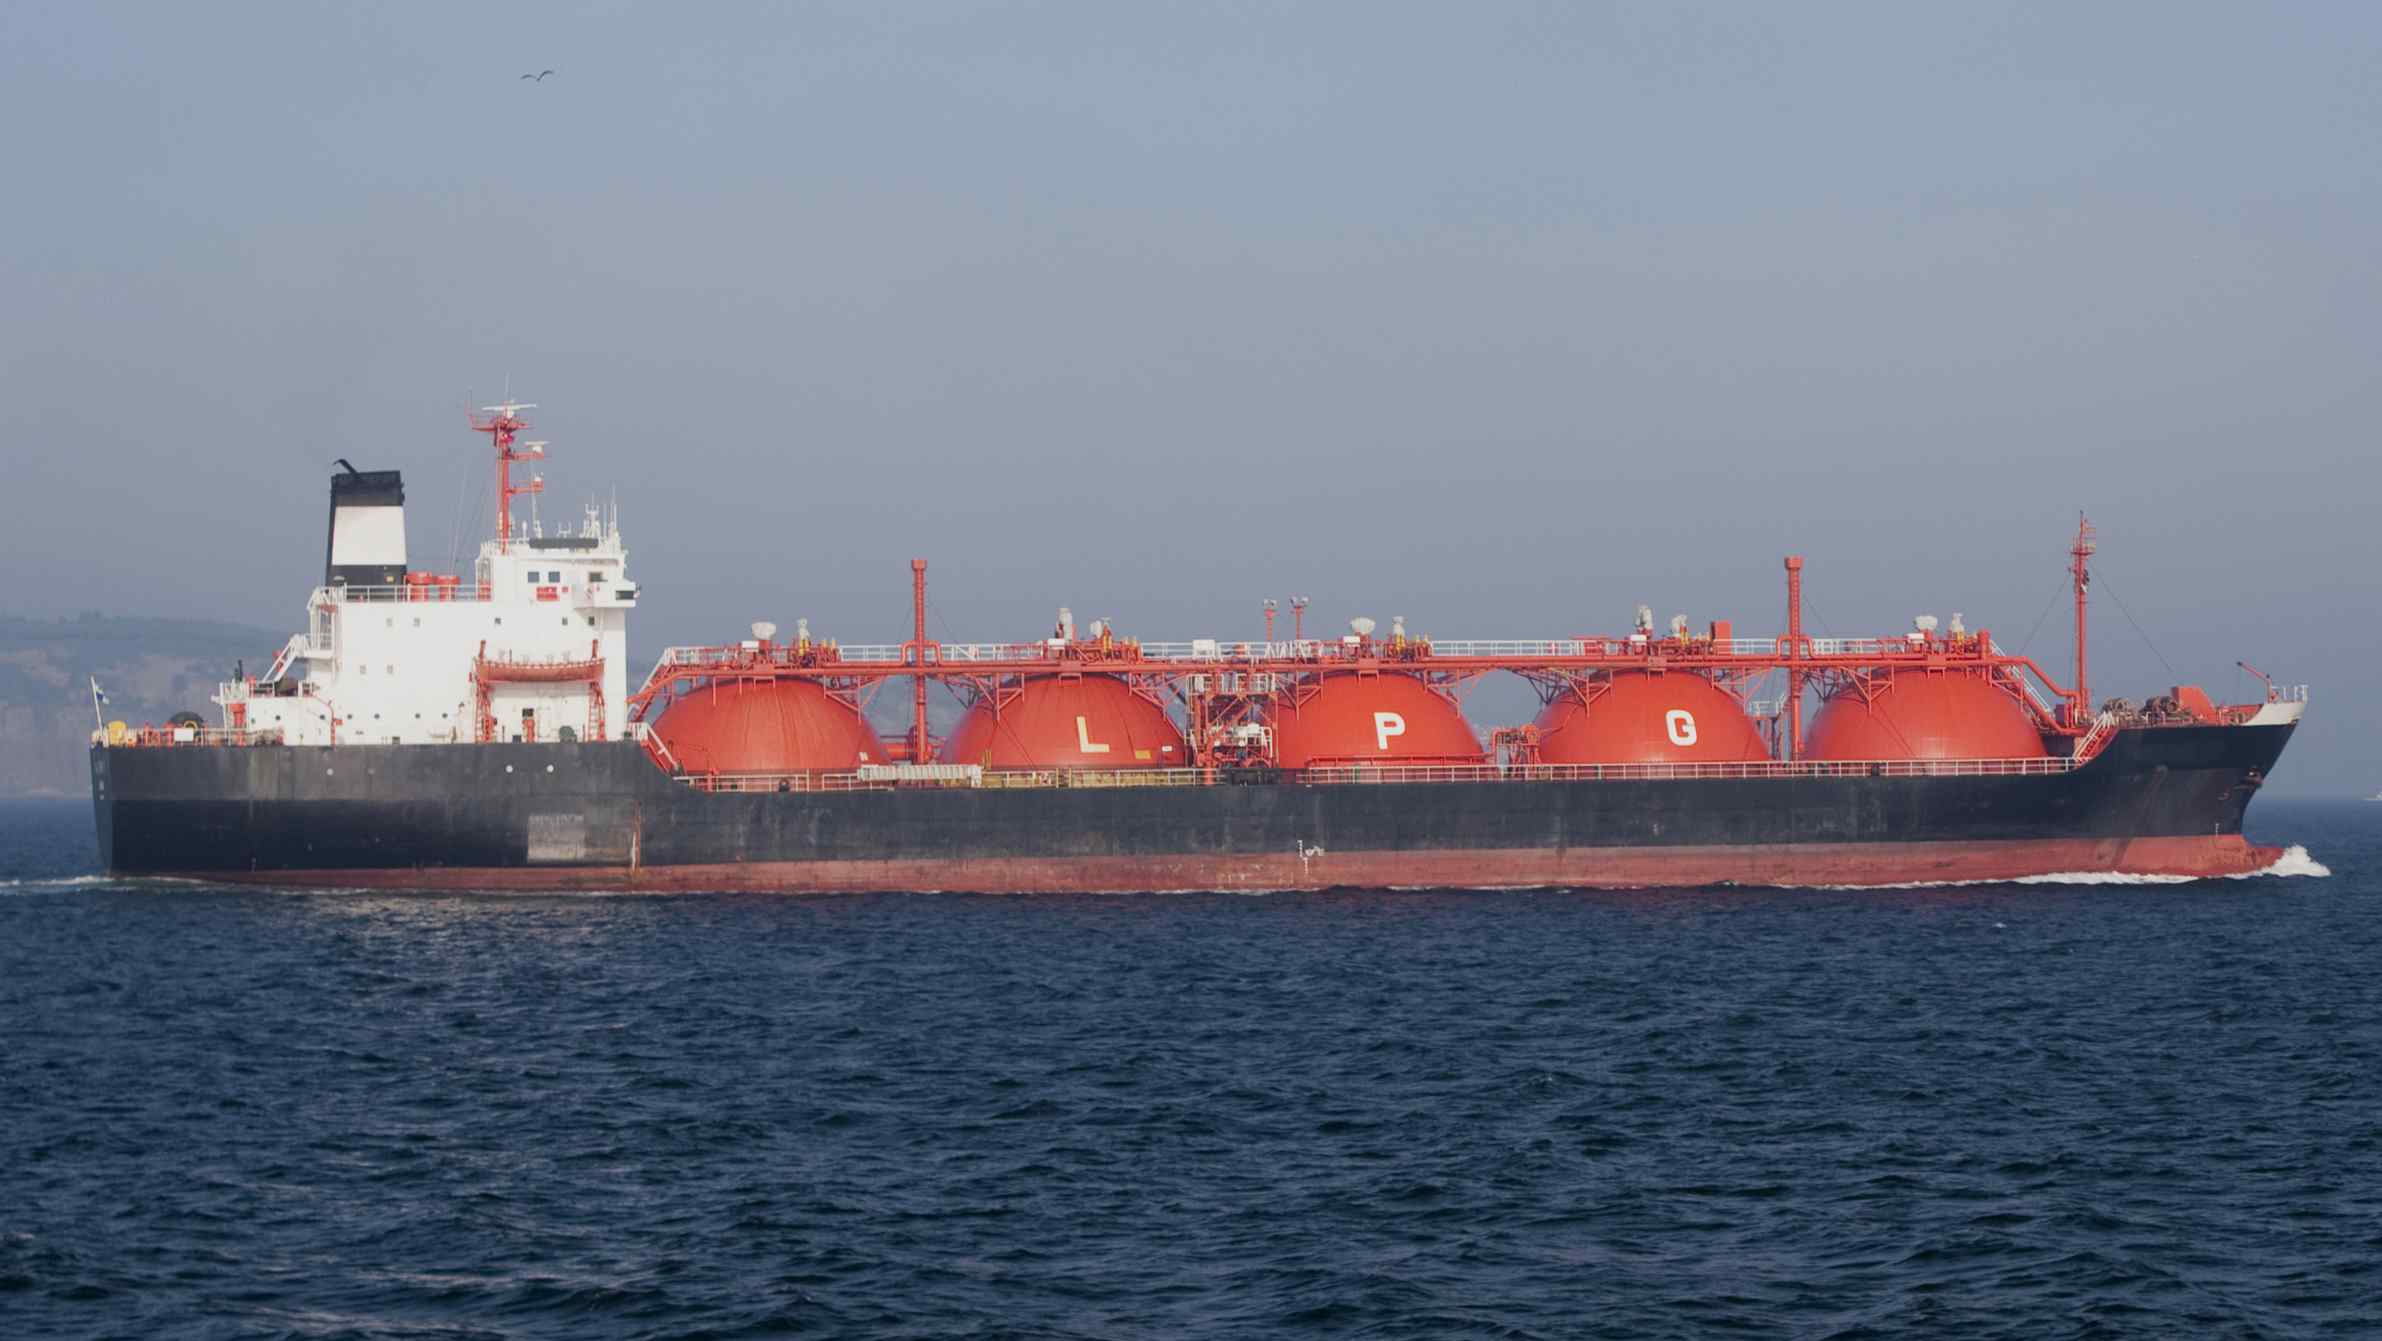 LPG tanker at sea ~ Shipping Matters Blog